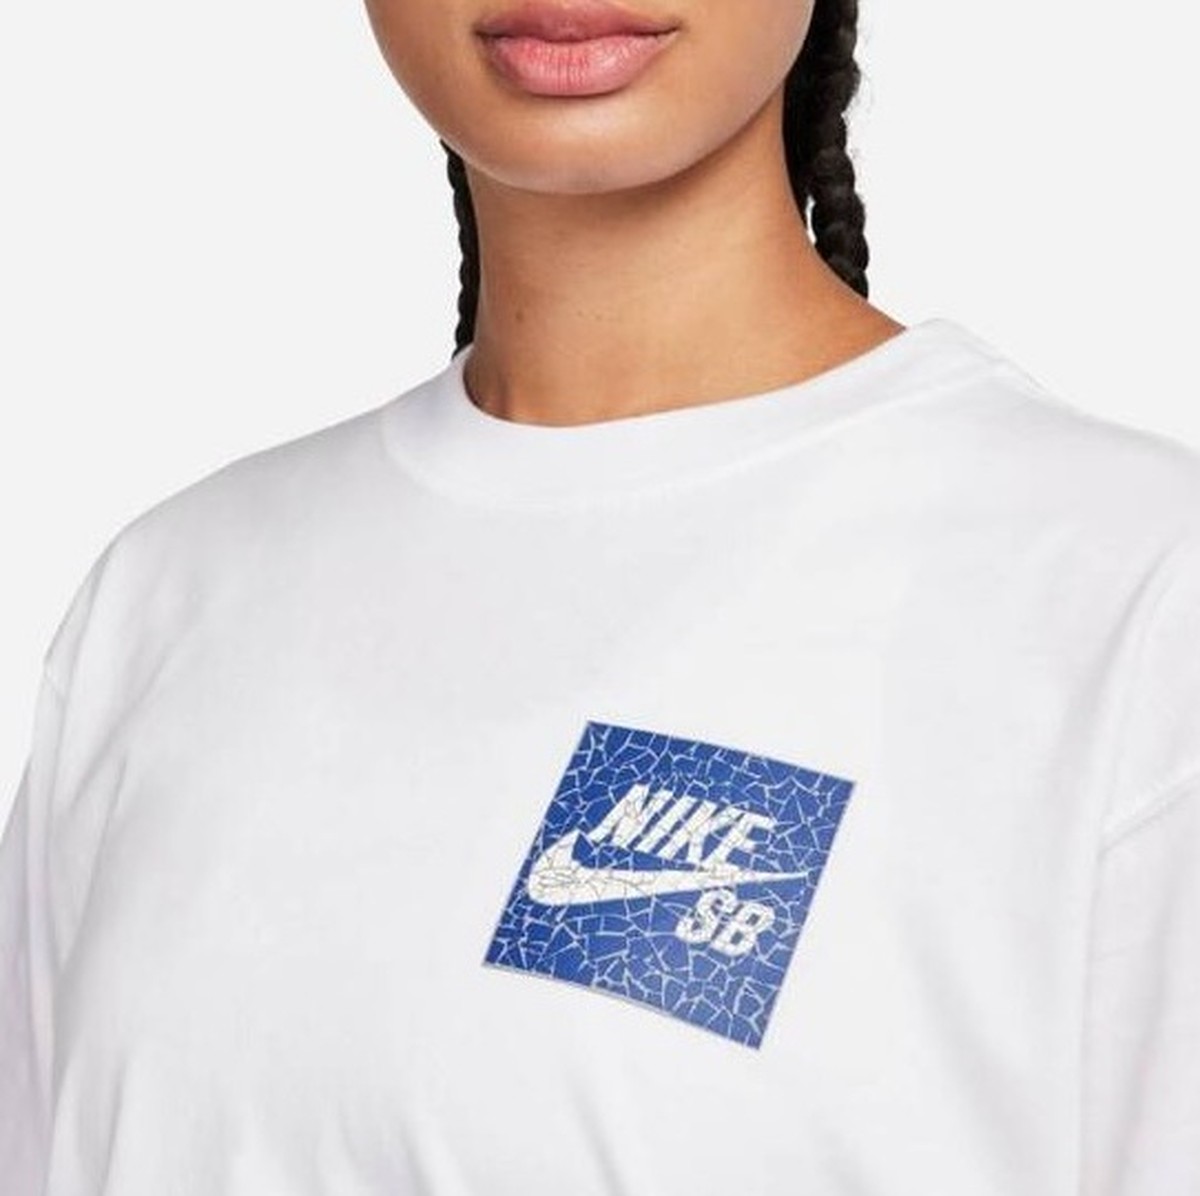 Camiseta Nike SB Mosaic Branco - Matriz Skate Shop Online